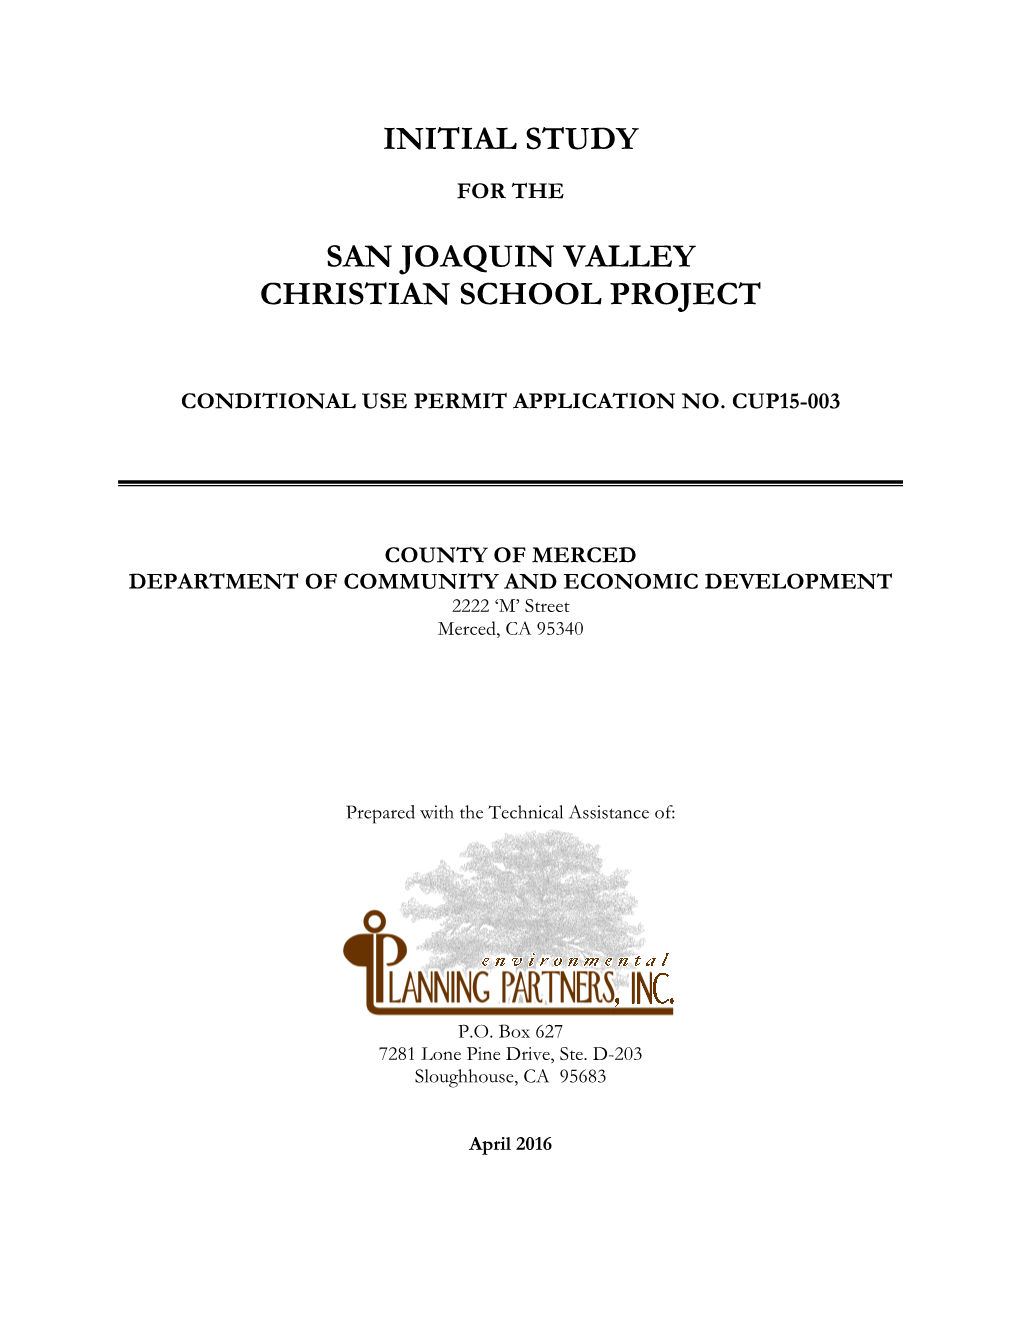 San Joaquin Valley Christian School Project